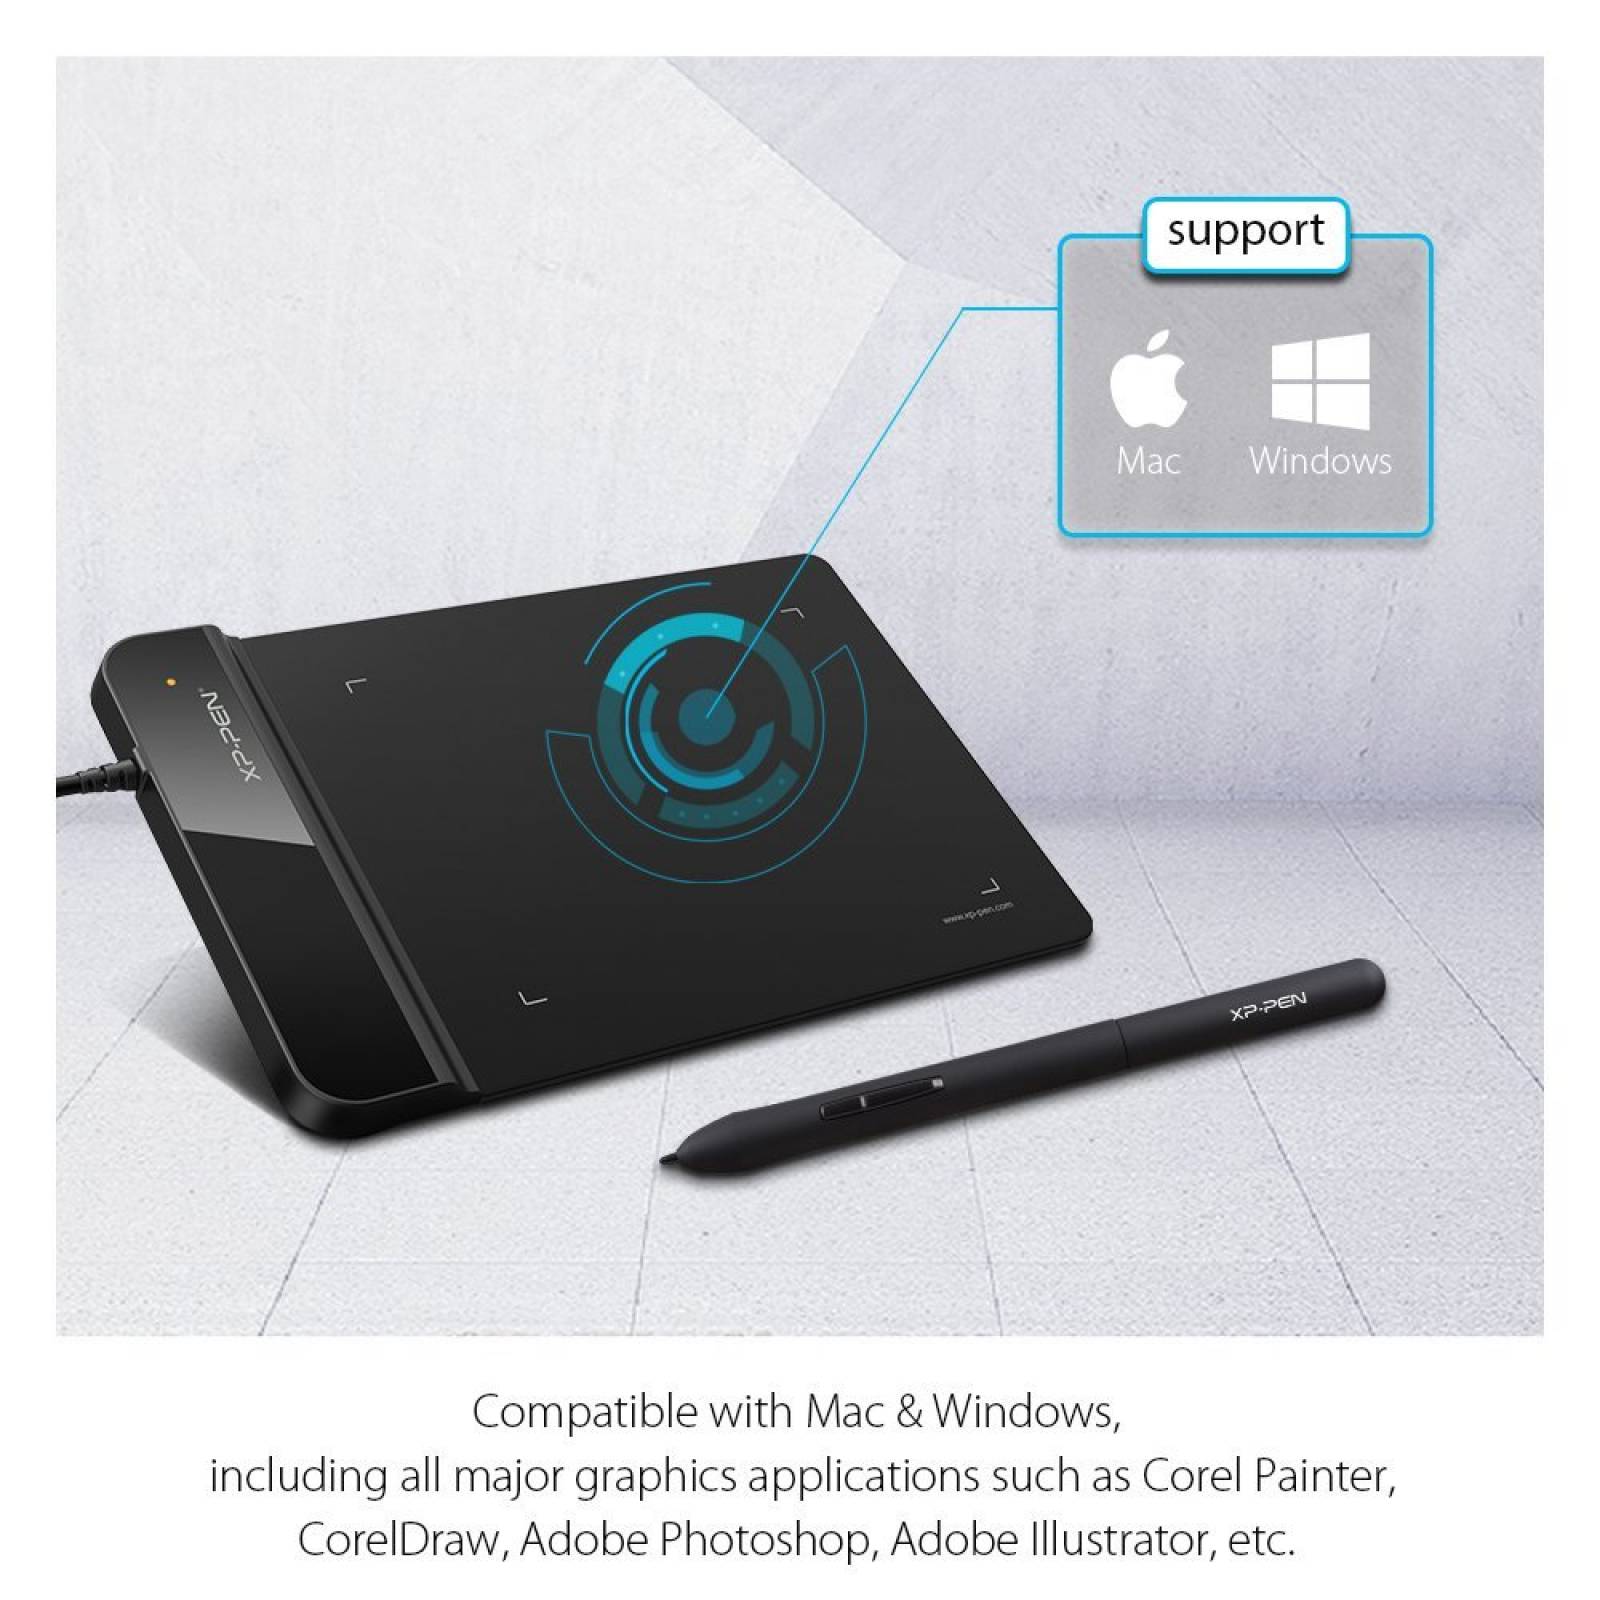 XP-Pen G430 OSU Tablet ultrafino gráfico Tablet 4x3 pulgadas